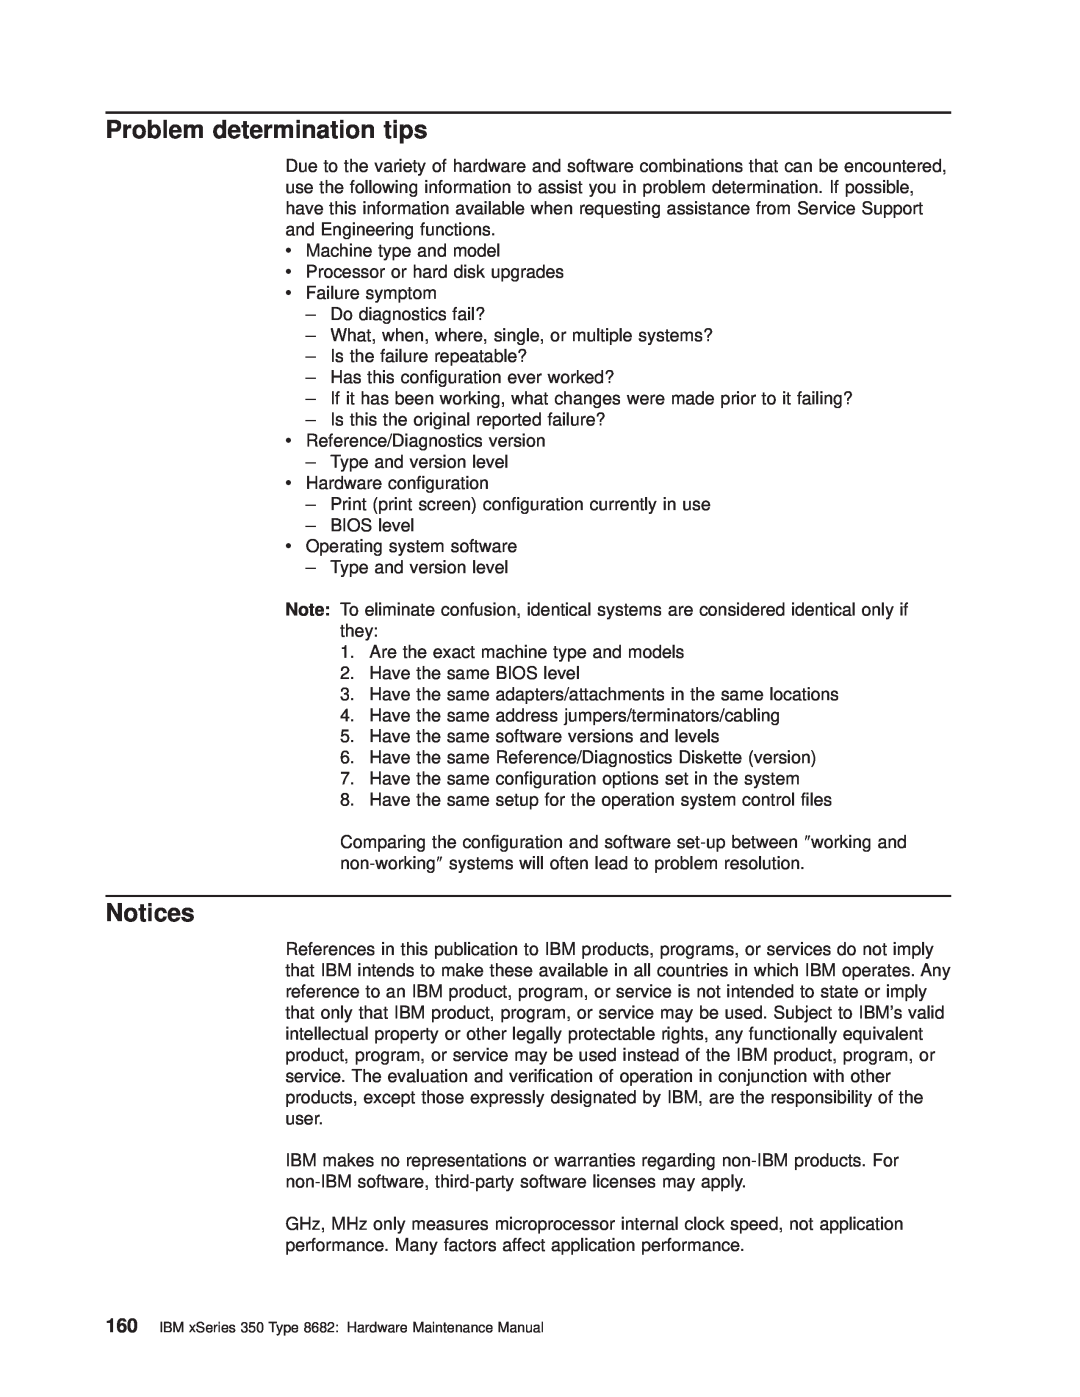 IBM 8682 manual Problem determination tips, Notices 